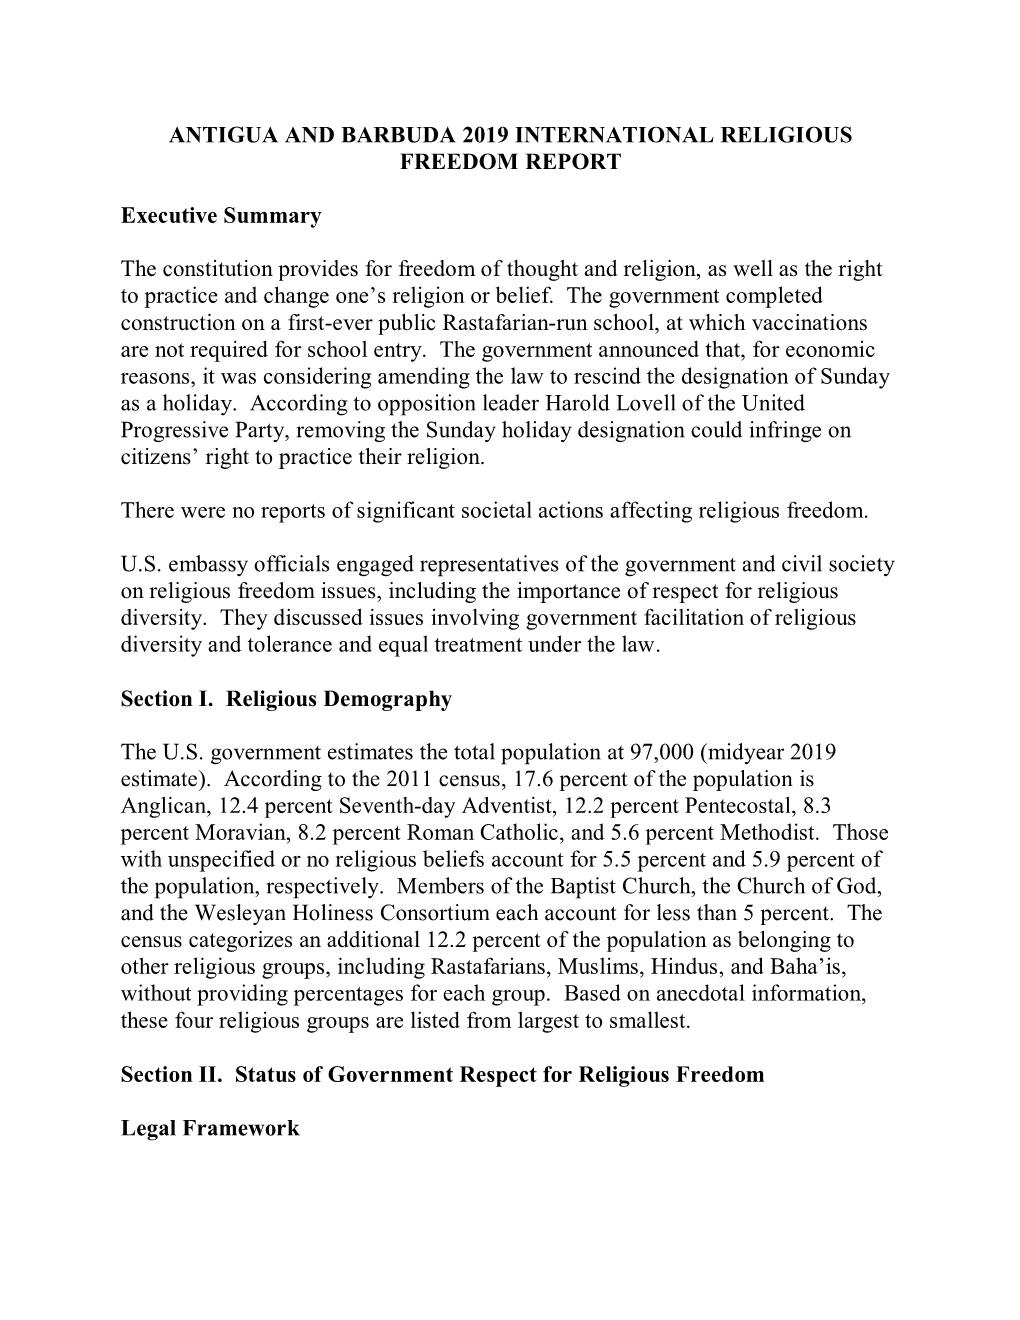 Antigua and Barbuda 2019 International Religious Freedom Report